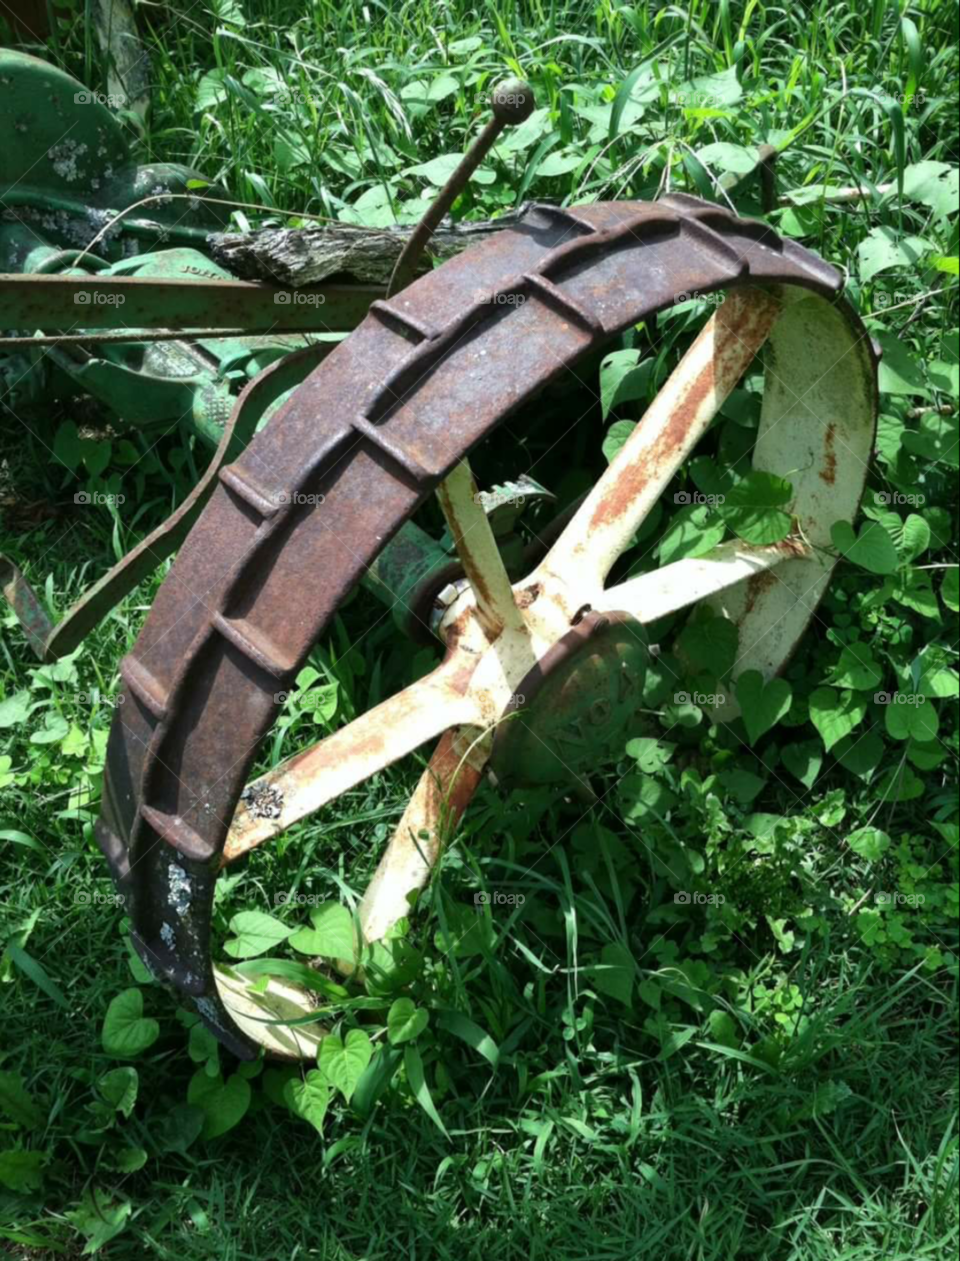 John deer wheel.. Taken on a farm in Pennington Gap, Va.